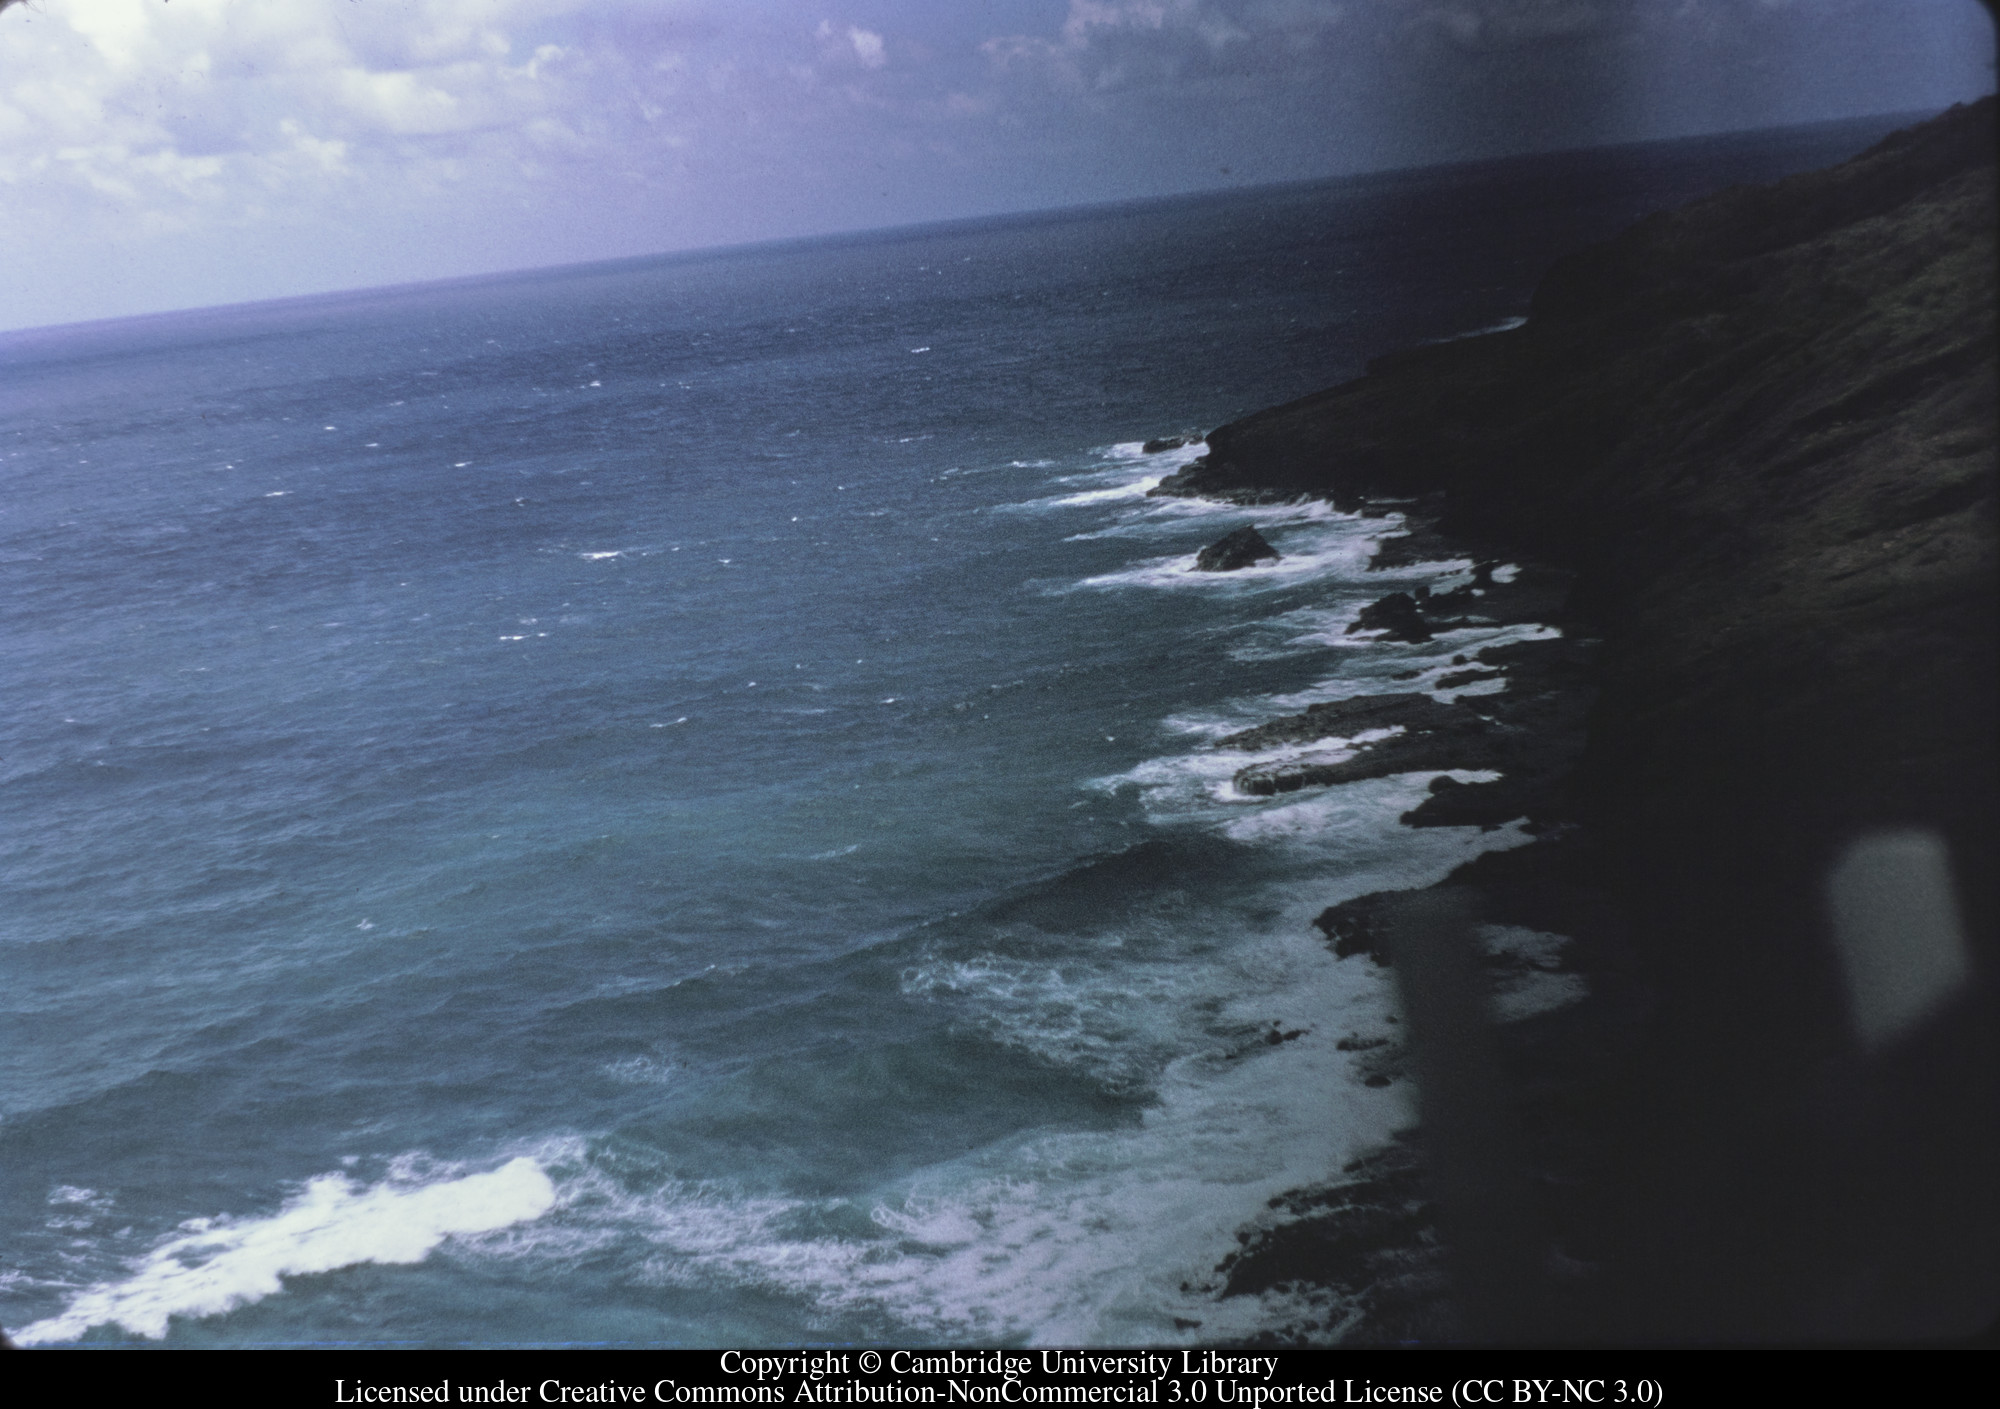 Windward coast, 1972-09